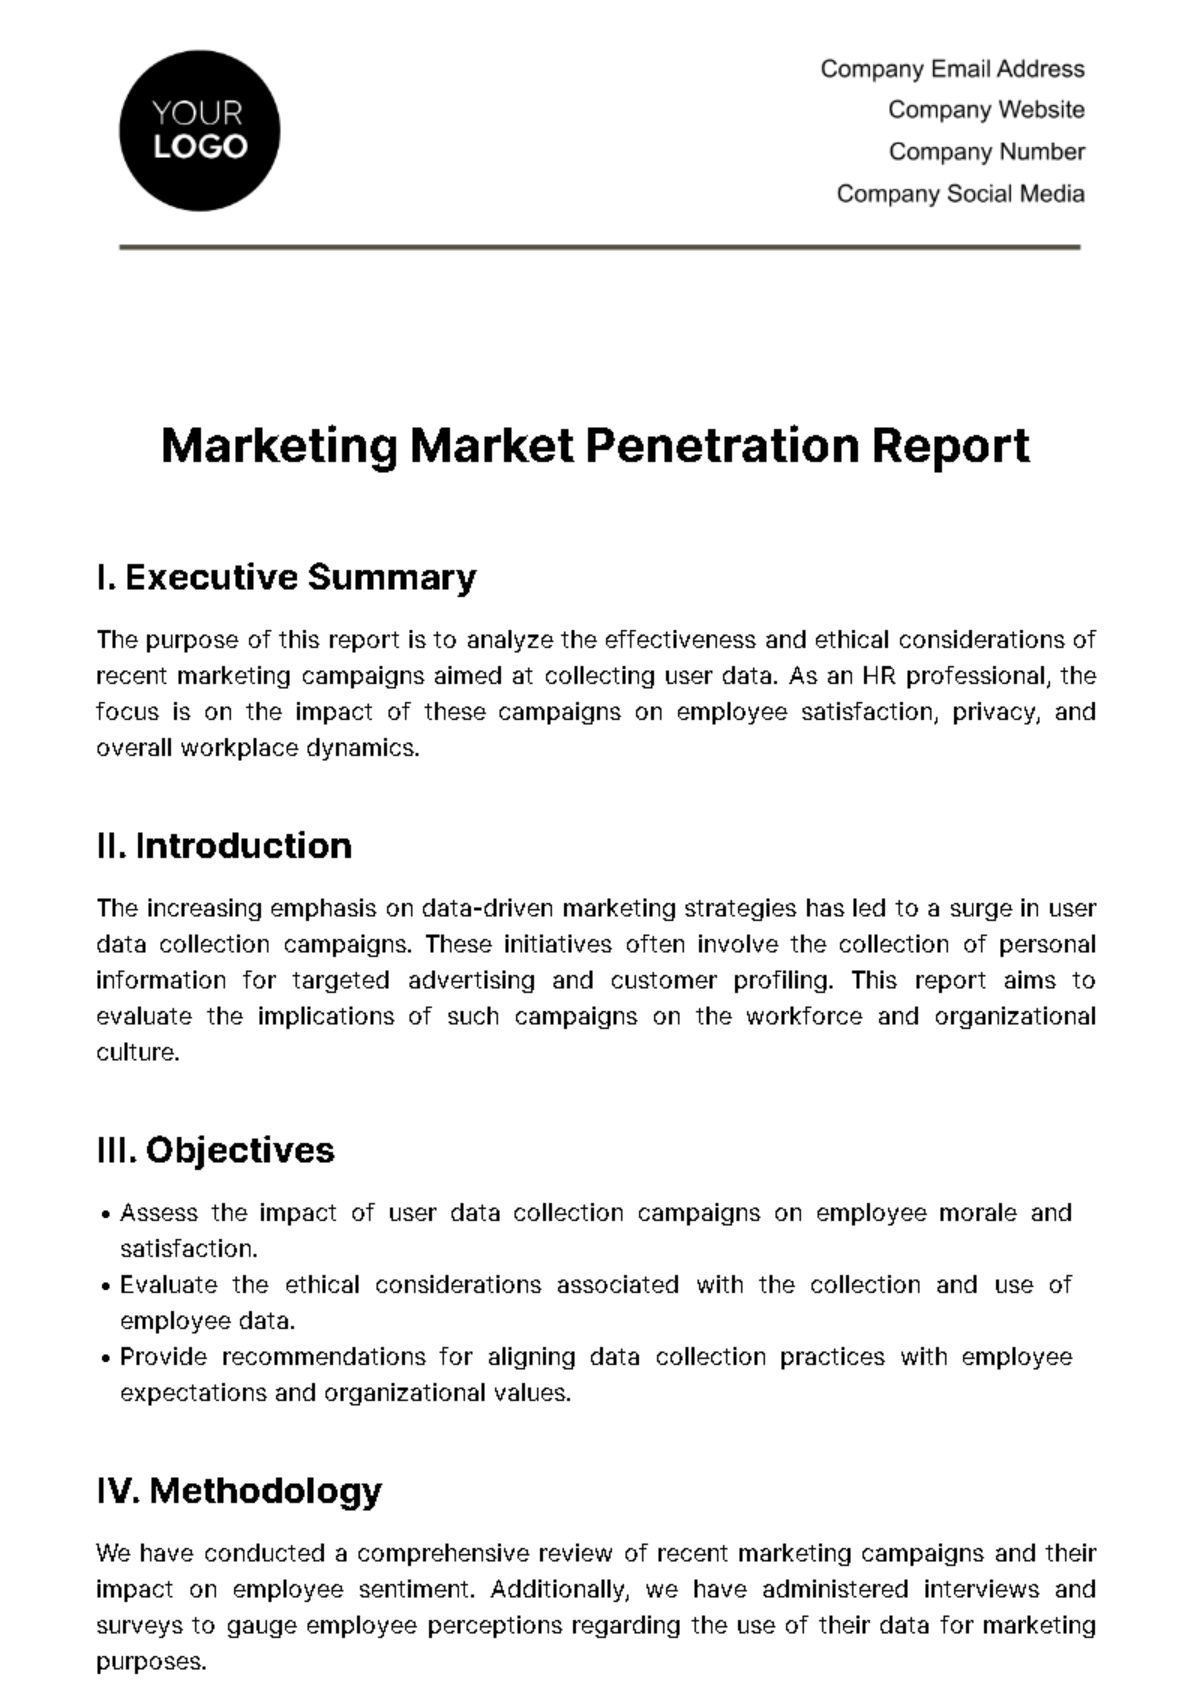 Marketing Market Penetration Report Template